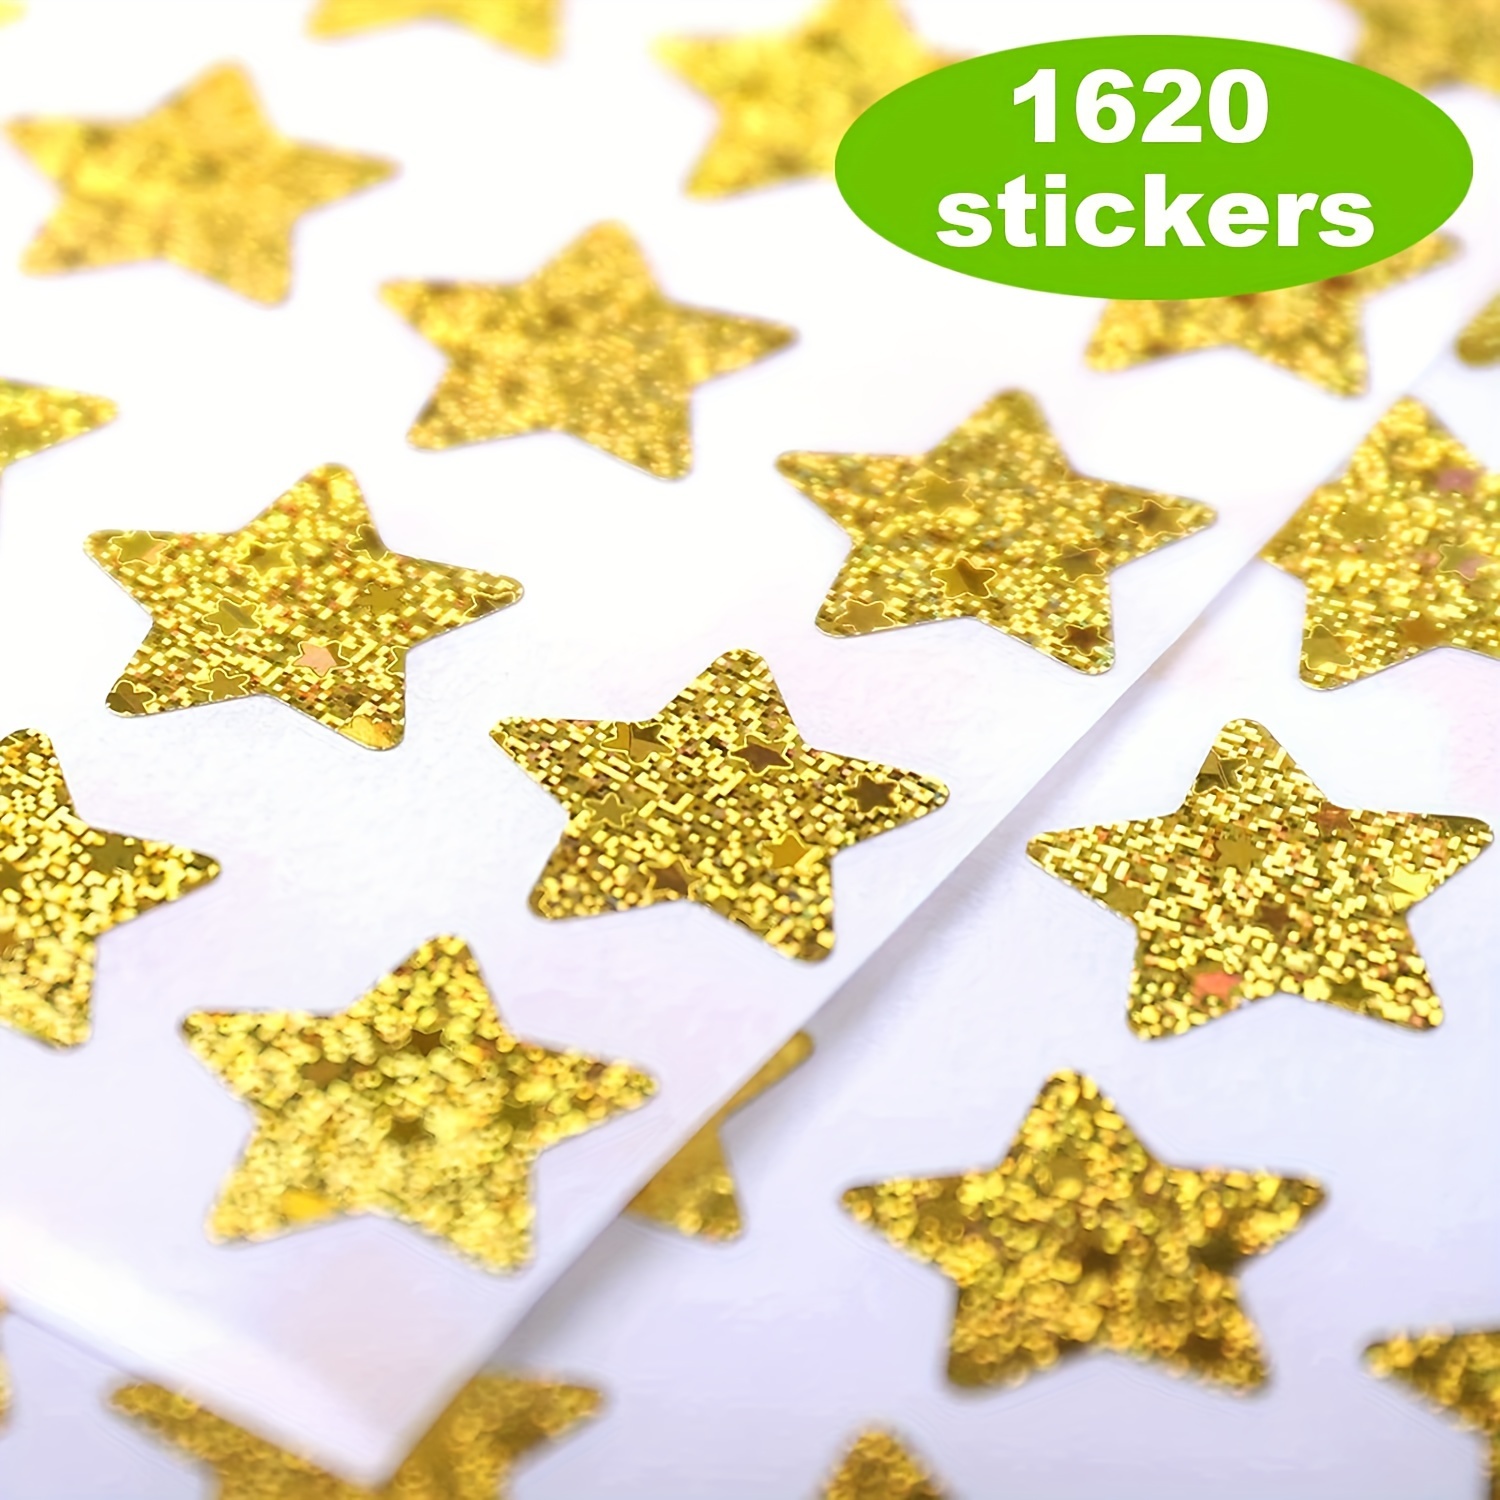 2,040 Gold Star Stickers for Kids Reward - Gold Stars Stickers Stars, Gold Stars Stickers Small, Gold Star Stickers Small, Gold Star Sticker, Gold